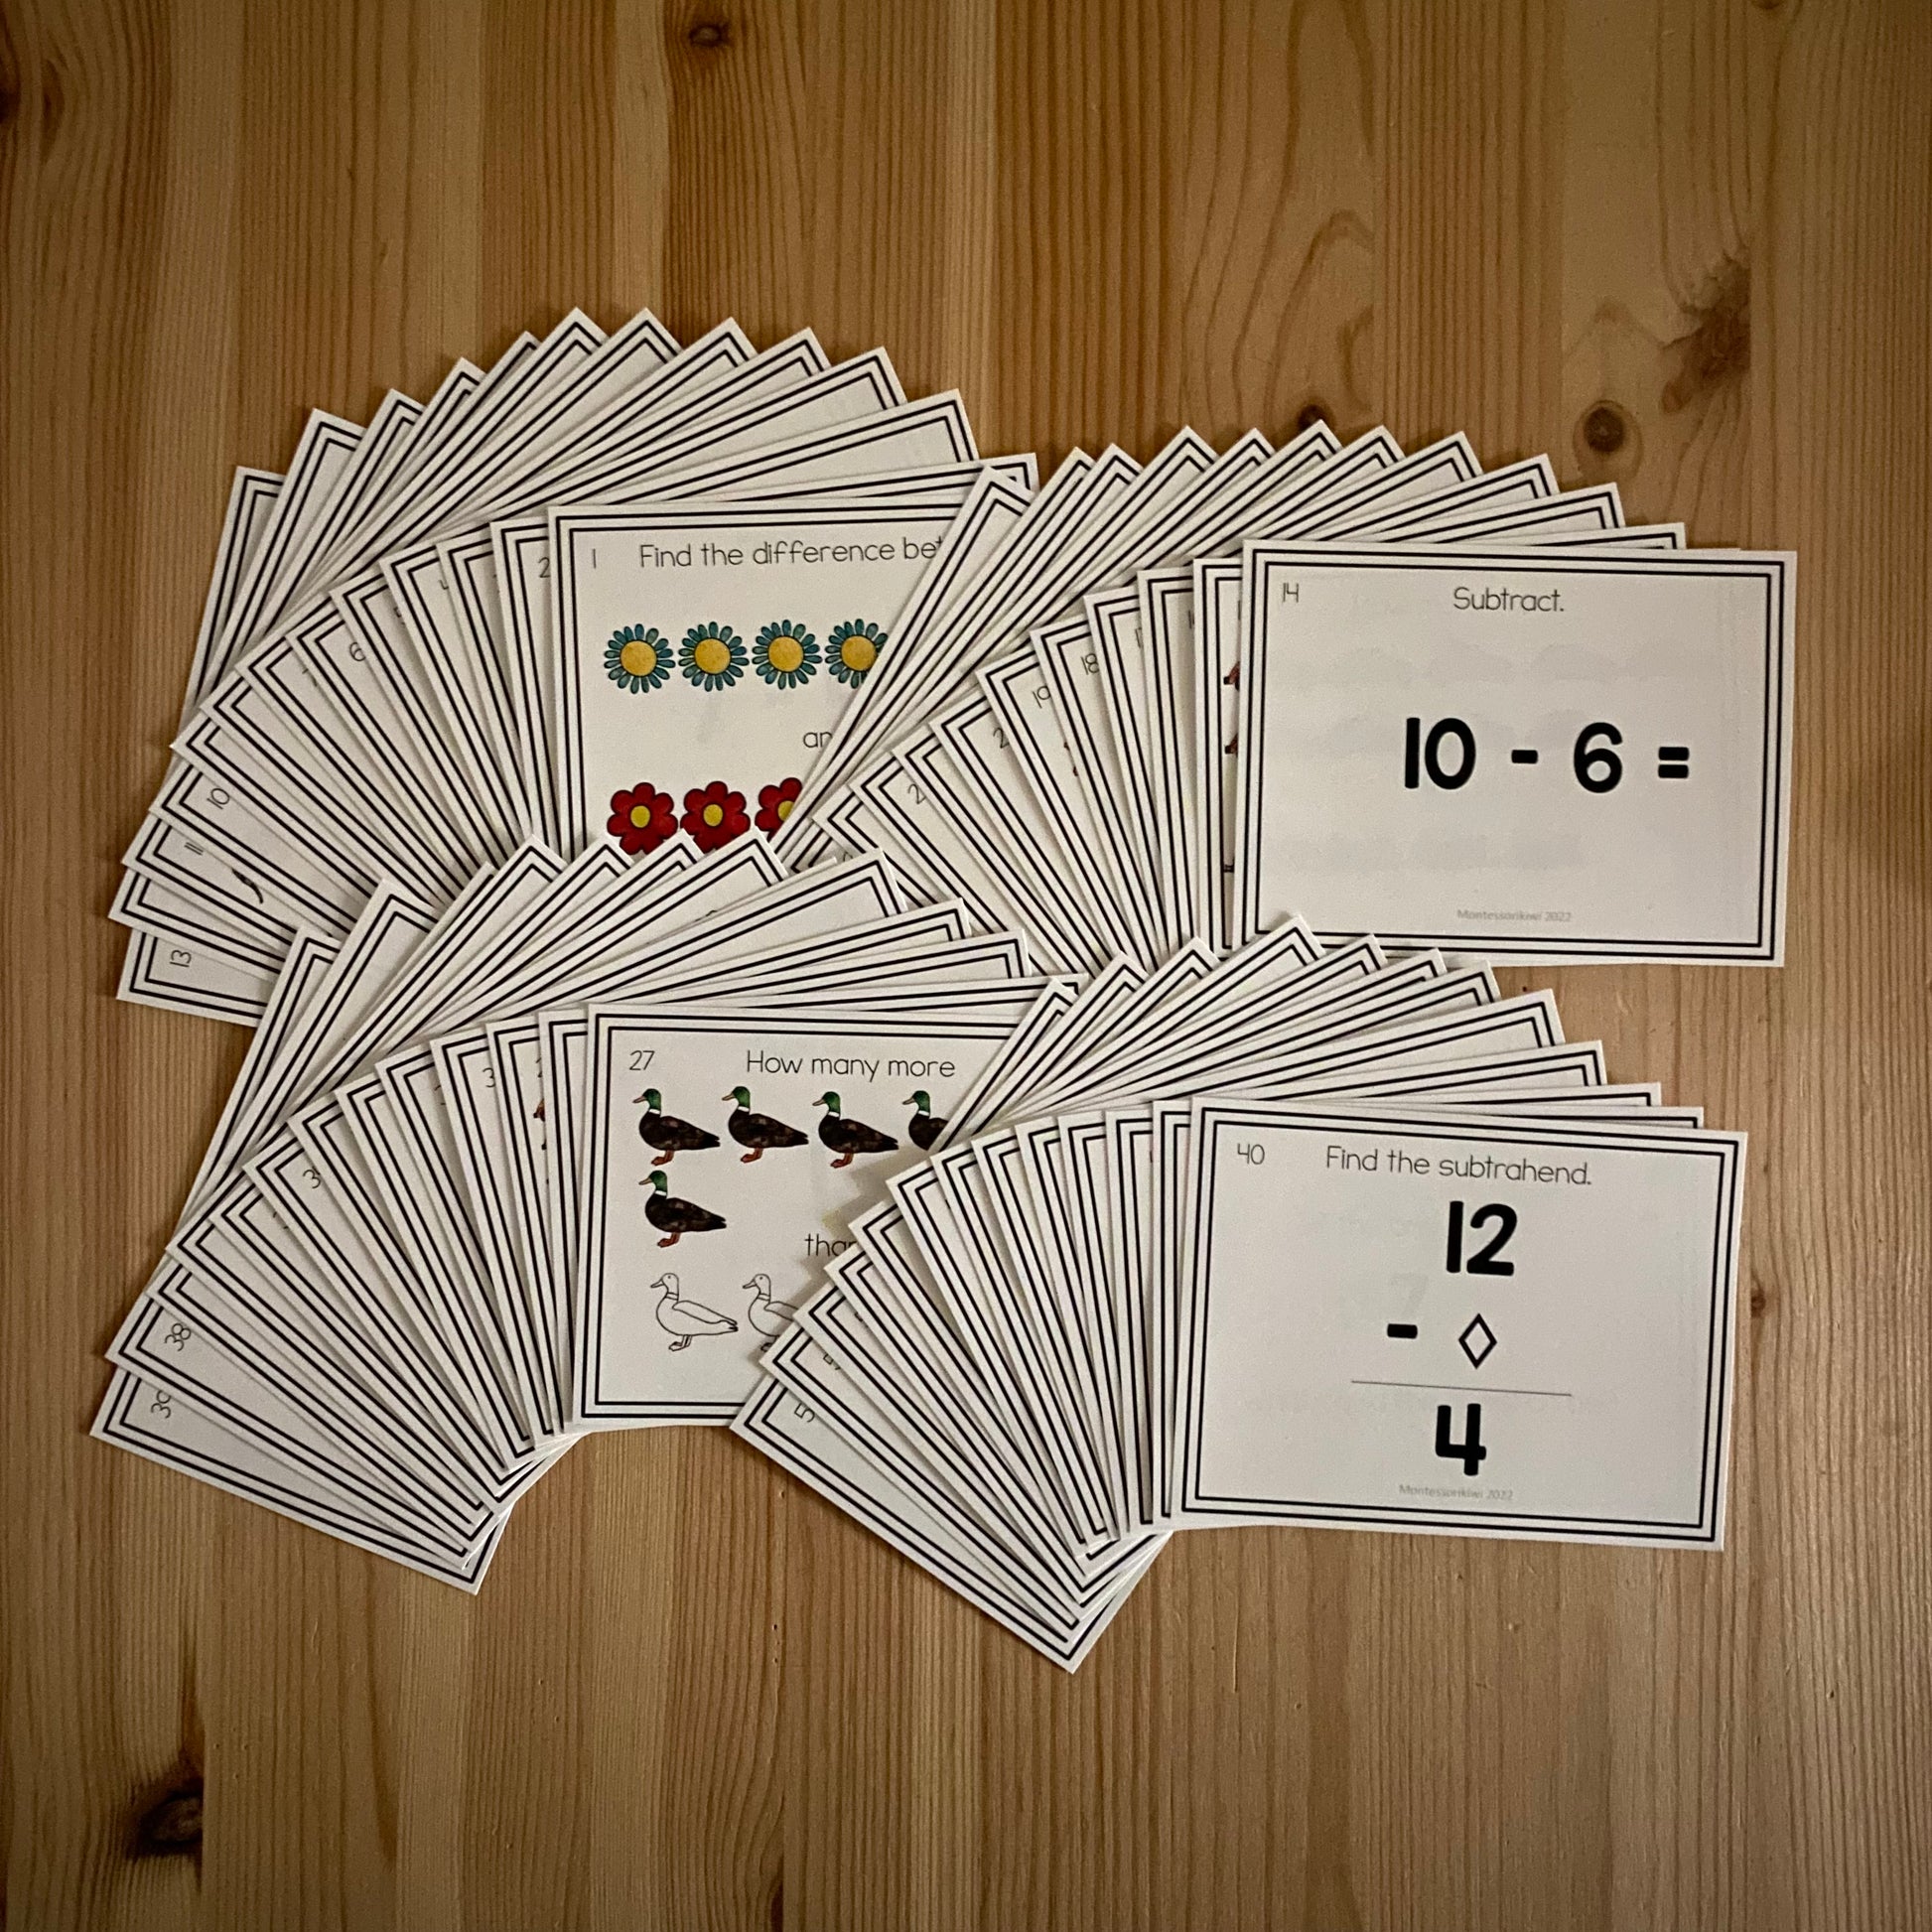 Montessori Subtraction Finger Chart Task Cards (math) - montessorikiwi